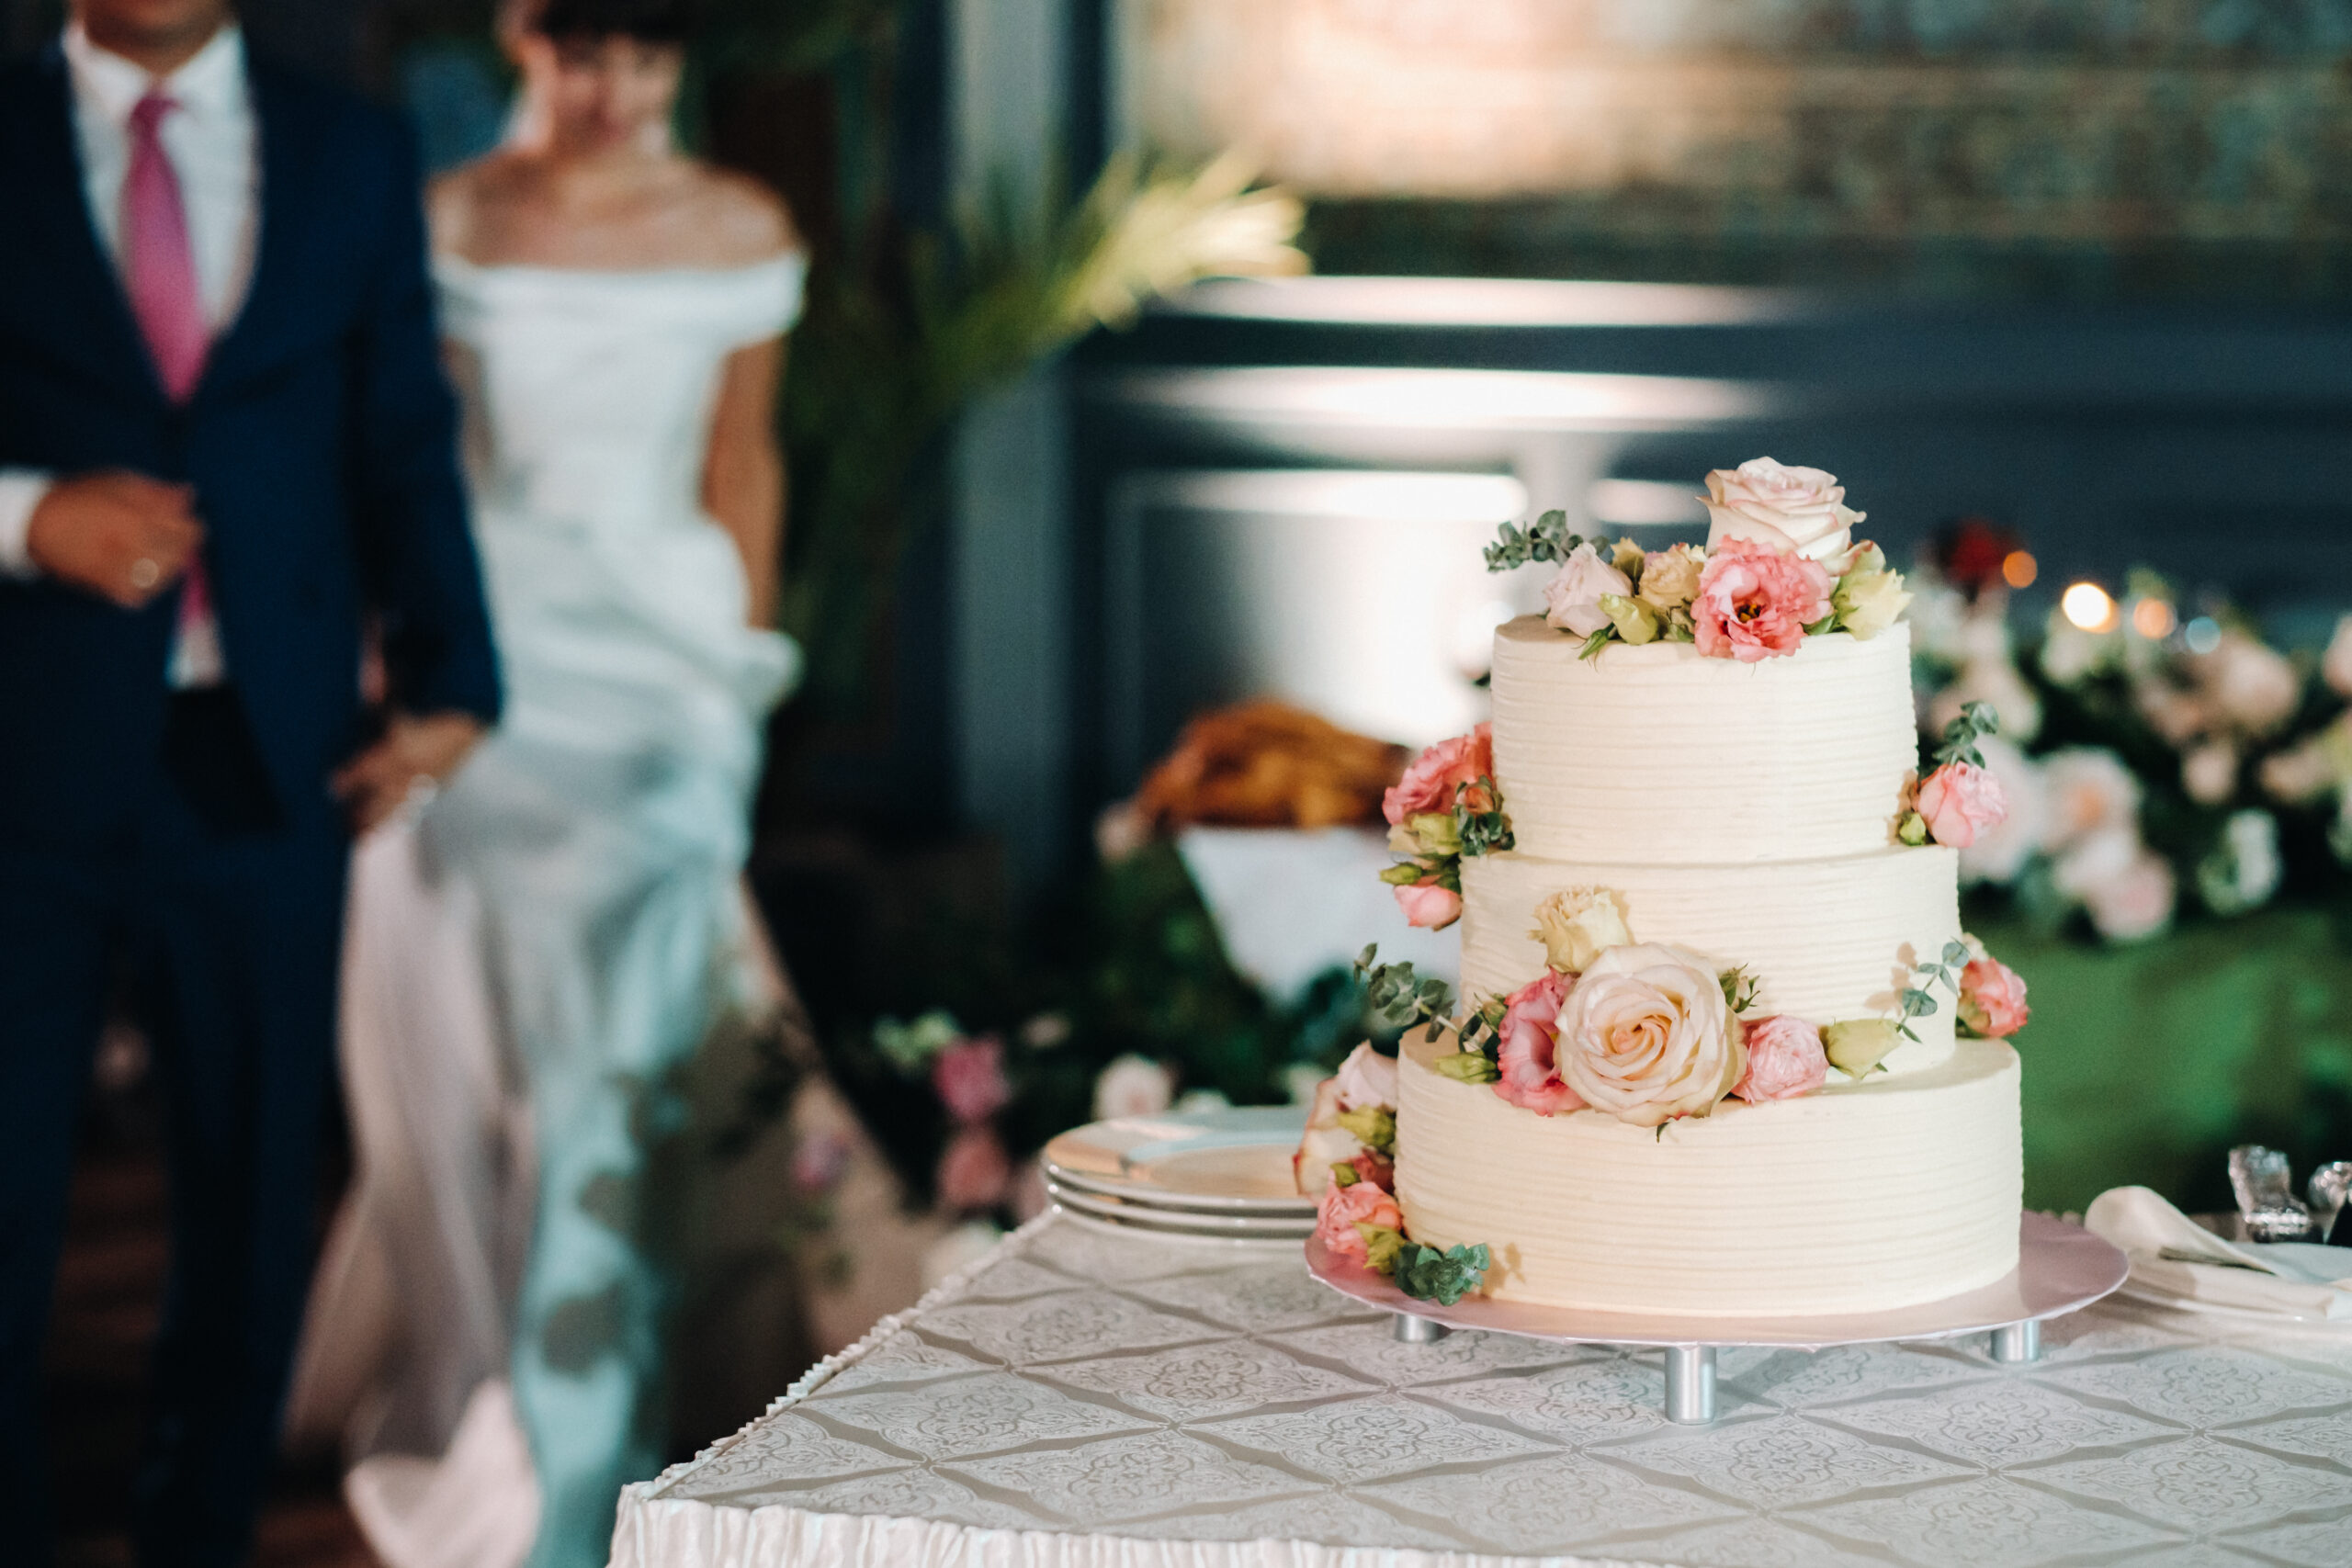 Elegant wedding cake at the wedding in three tiers